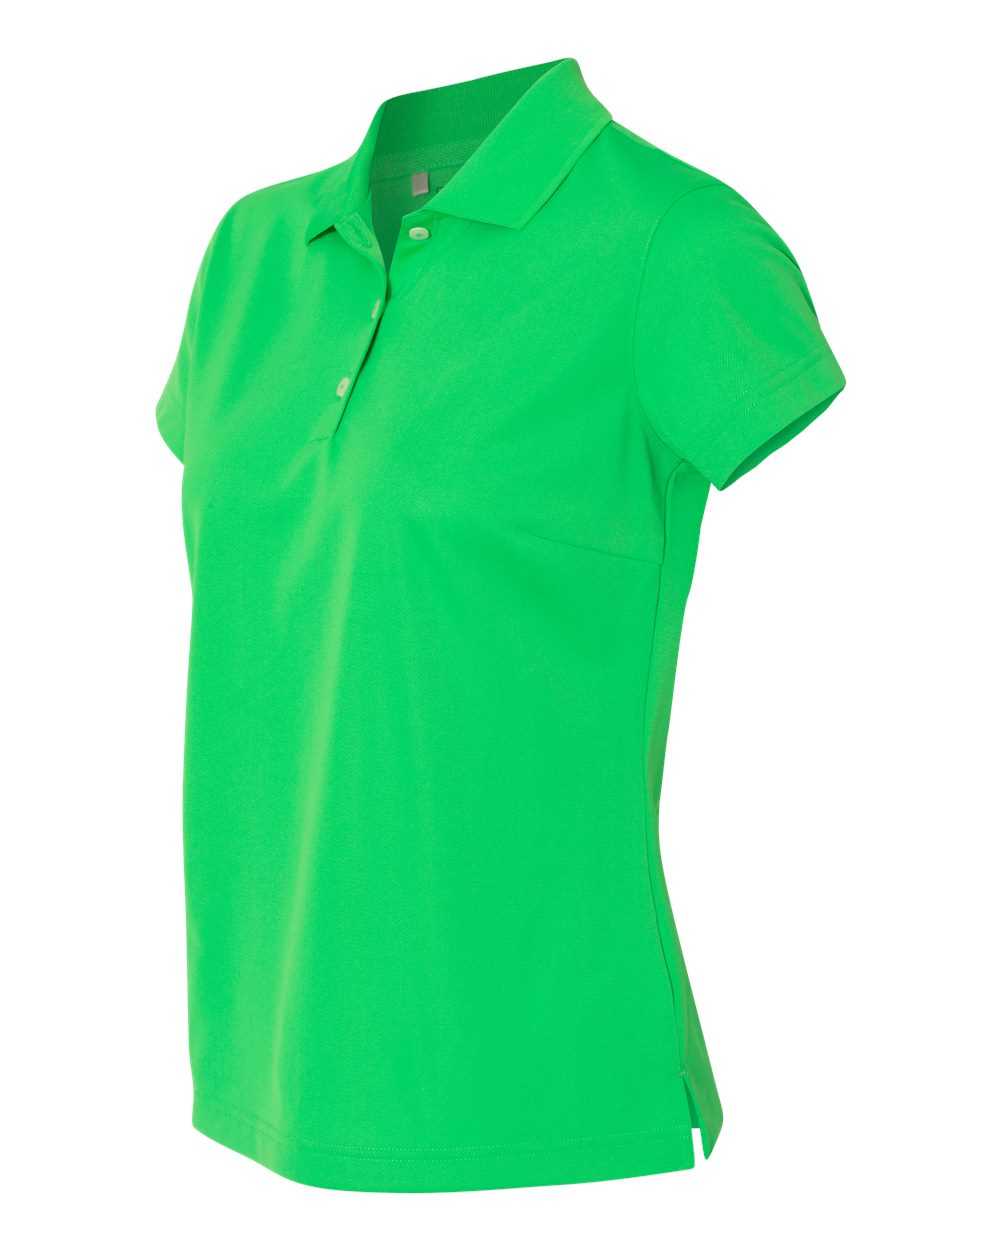 Adidas A131 Women's Basic Sport Shirt - Solar Lime White - HIT a Double